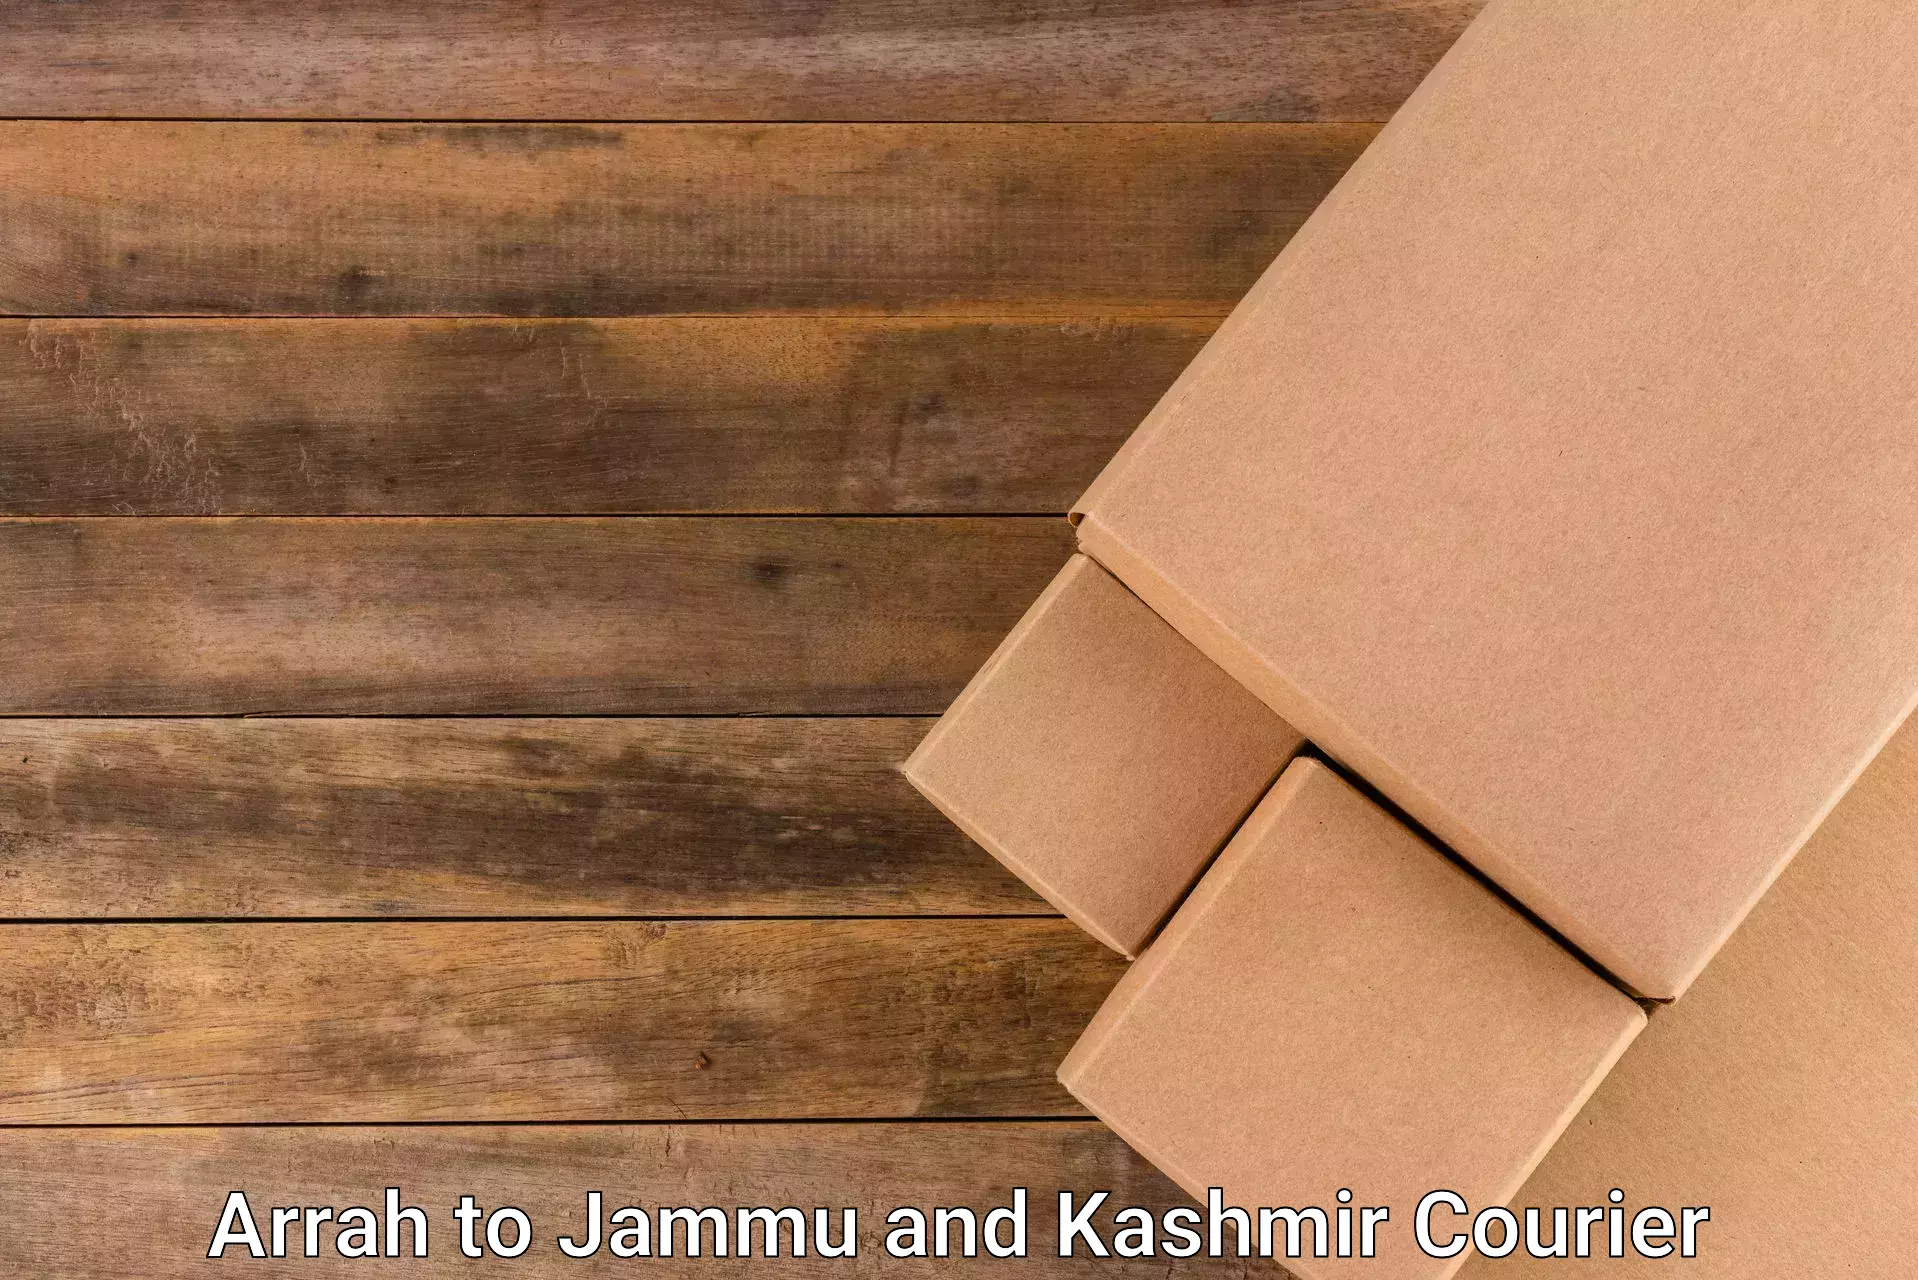 Discounted shipping Arrah to Srinagar Kashmir